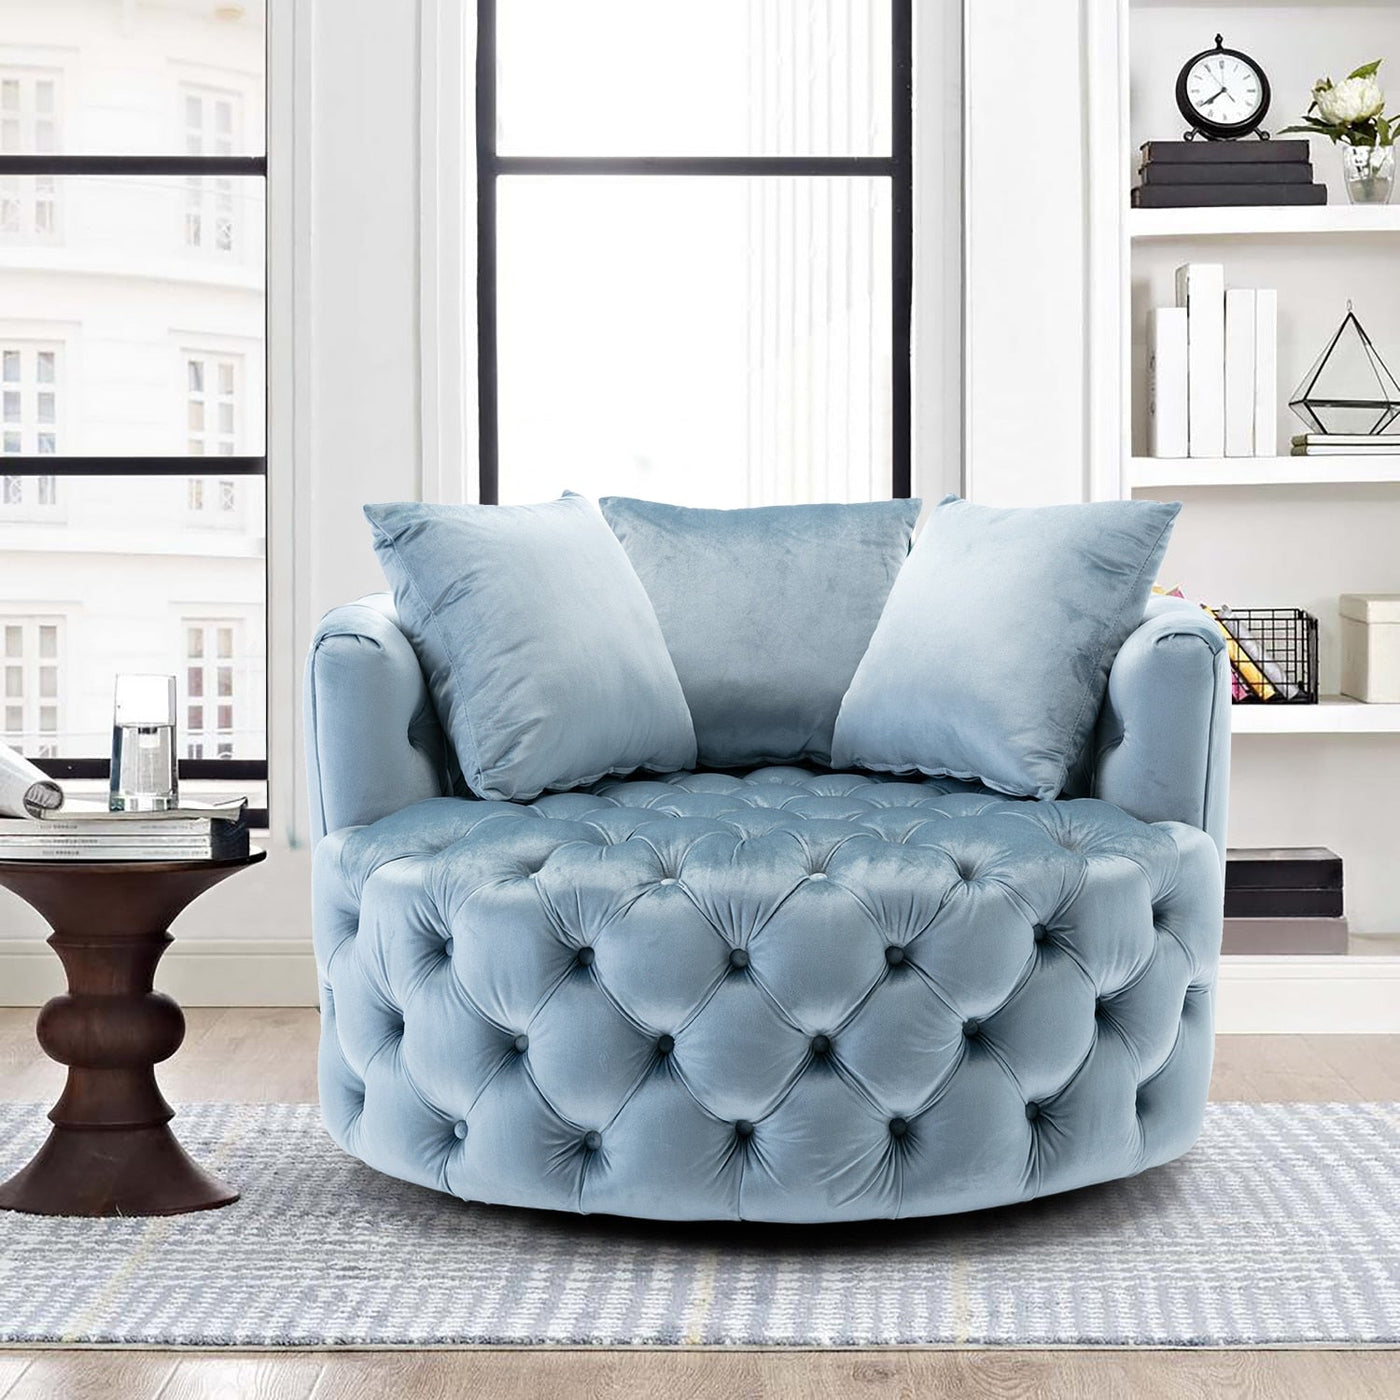 Homio Decor Living Room Velvet / Light Blue Luxury Button Tufted Round Leisure Chair